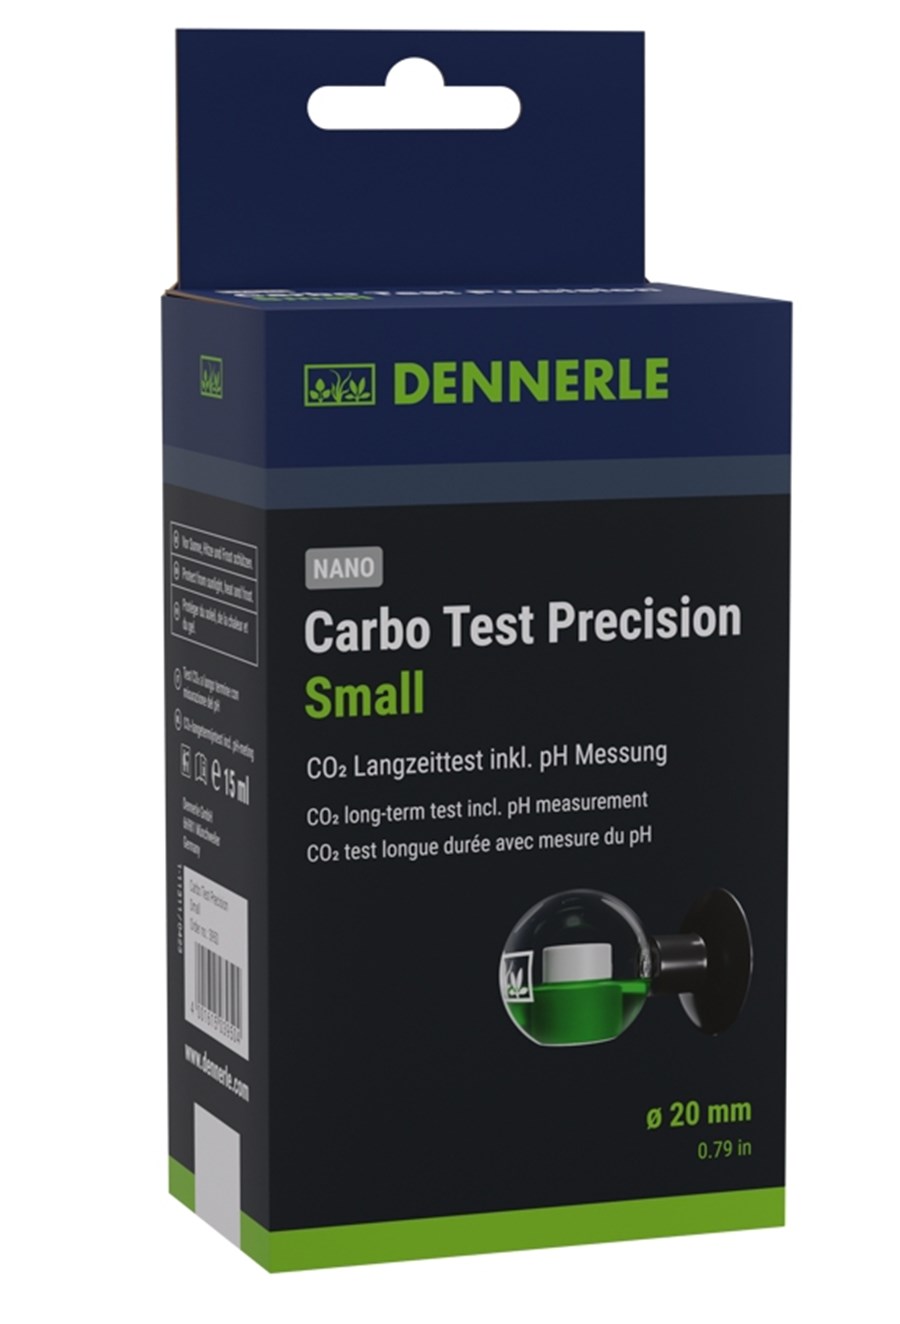 Carbo Test Precision Small